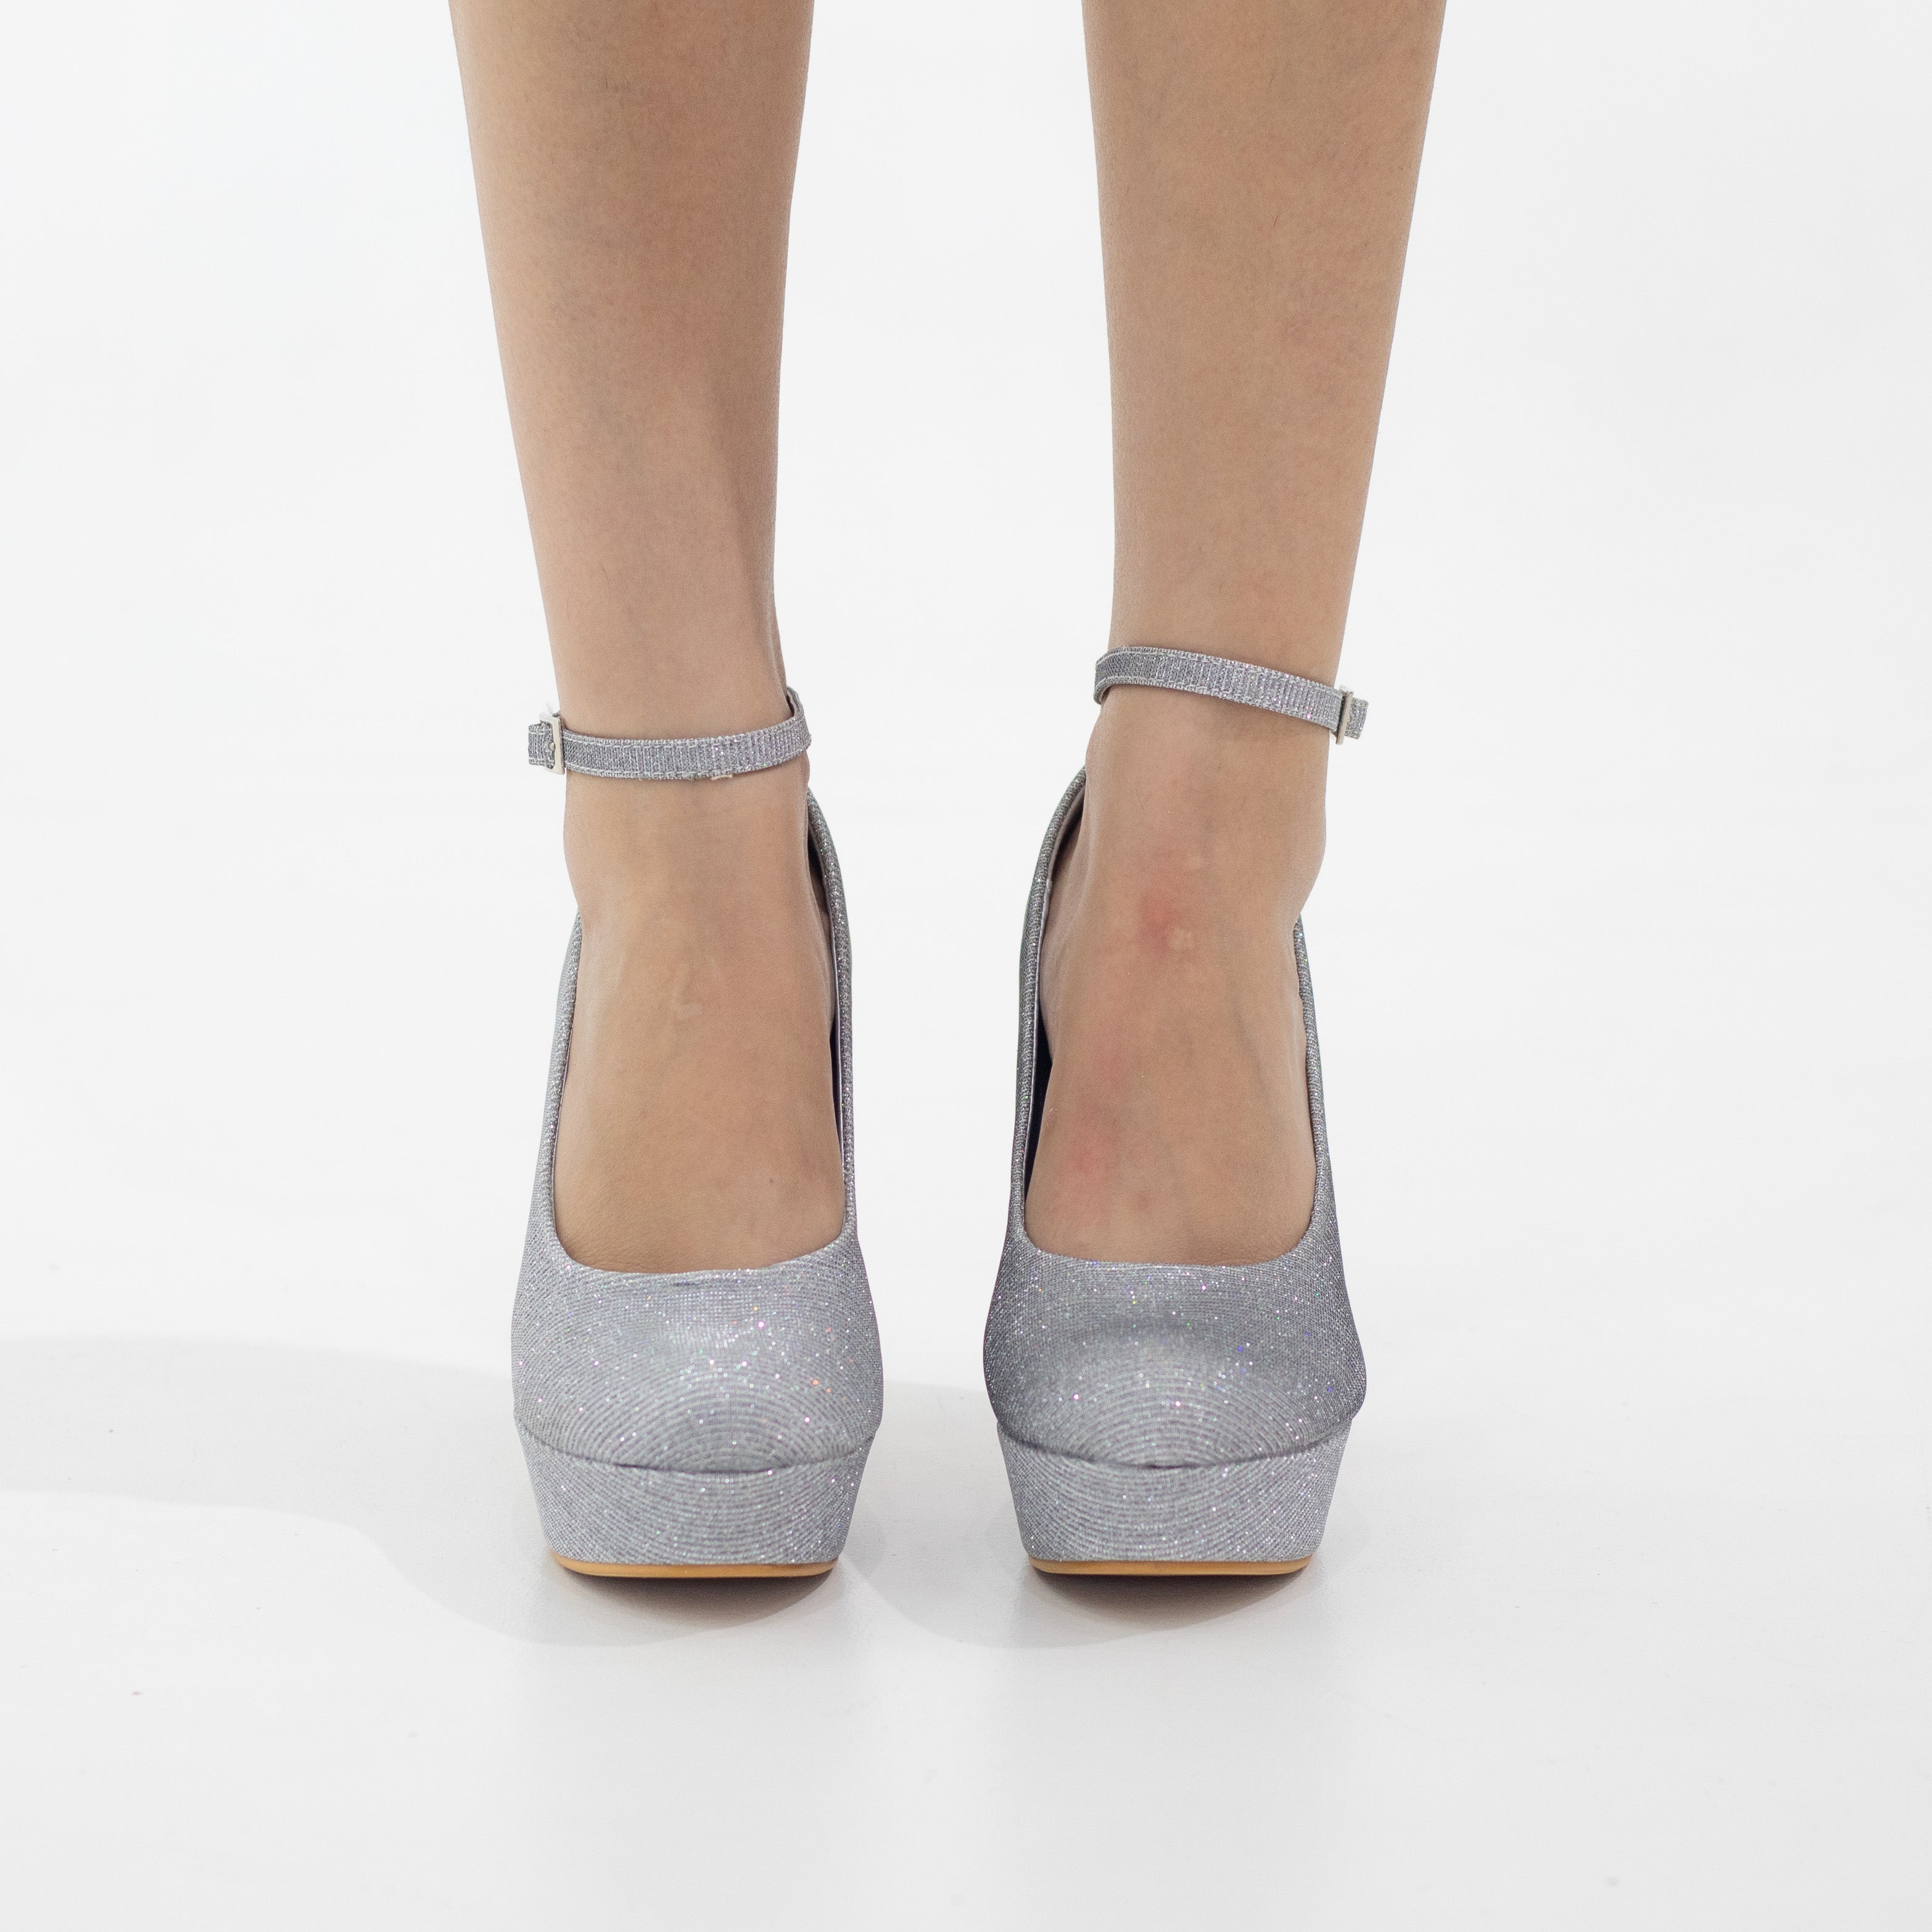 Silver ankle strap platform courts shimmer 12cm heel irana